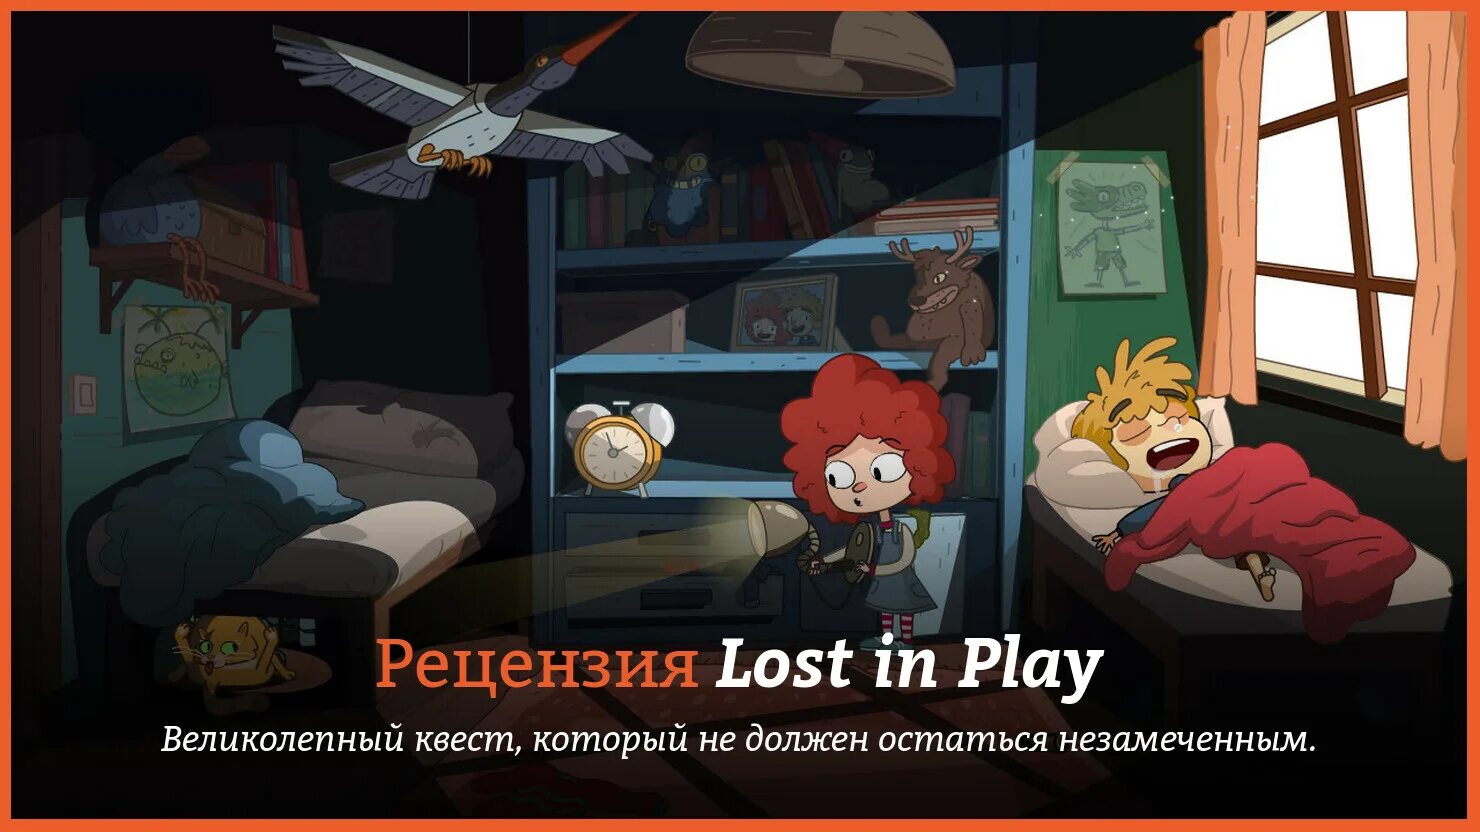 Lost in Play. Игра the Lost in Play кот. Lost in Play картинки. Lost in Play эпизоды. Лост ин плей полная бесплатная версия